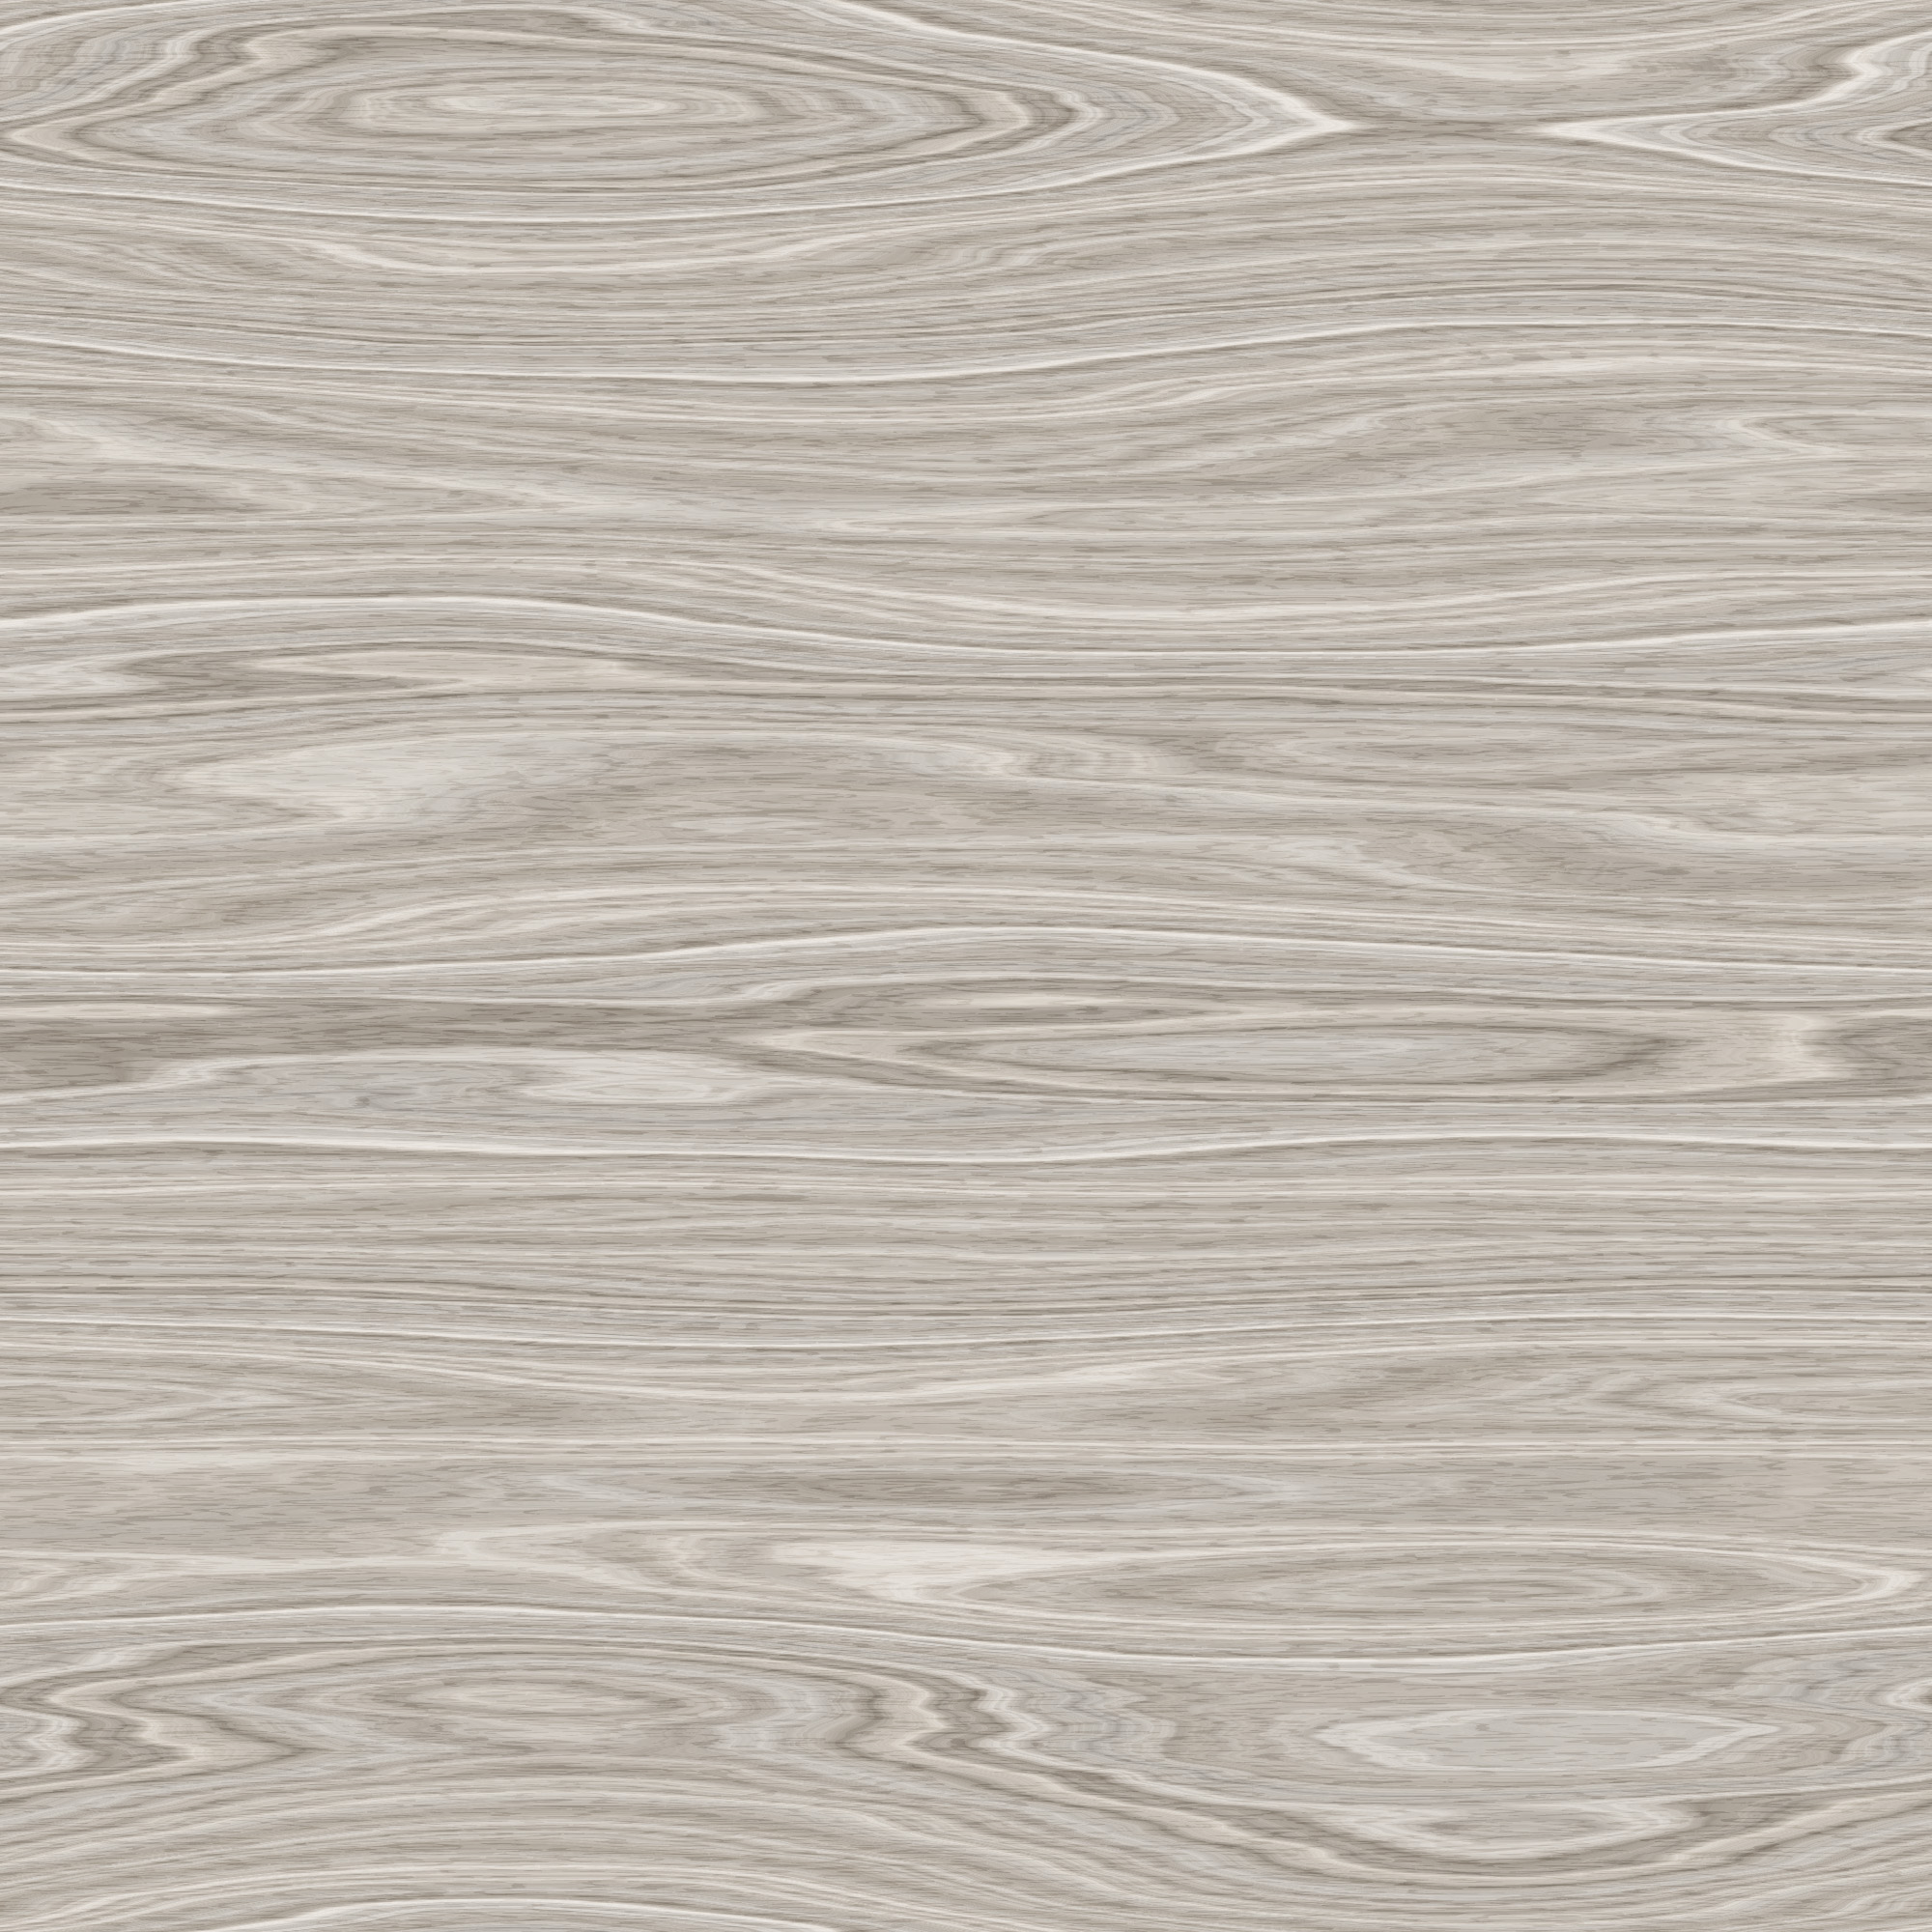 Wooden Texture Wood Floor Seamless Rich Patterns